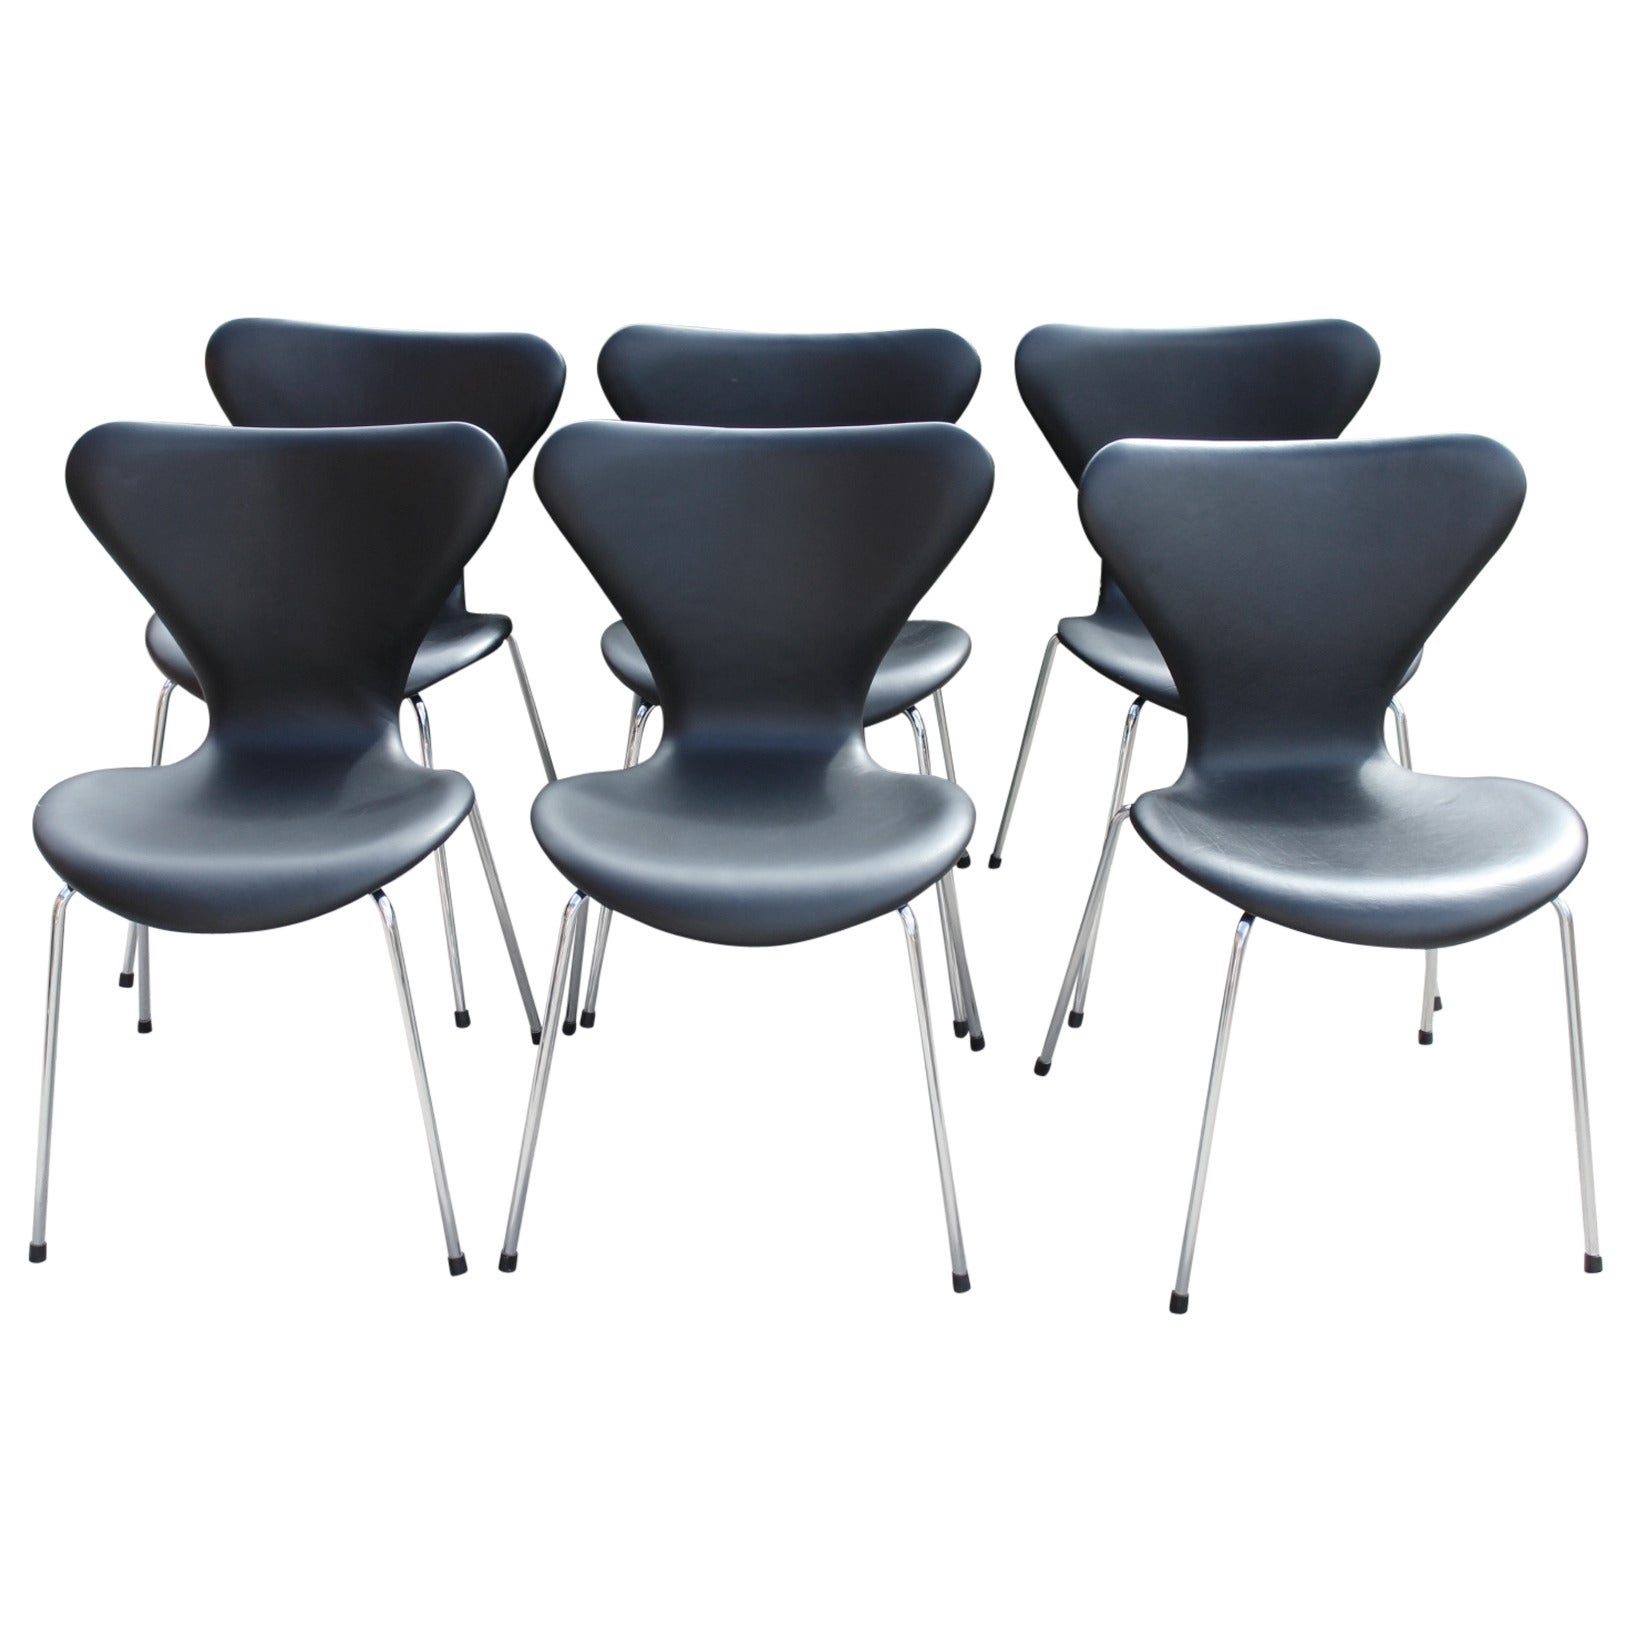 Six Arne Jacobsen chairs by Fritz Hansen, Black Leather, Model 3107